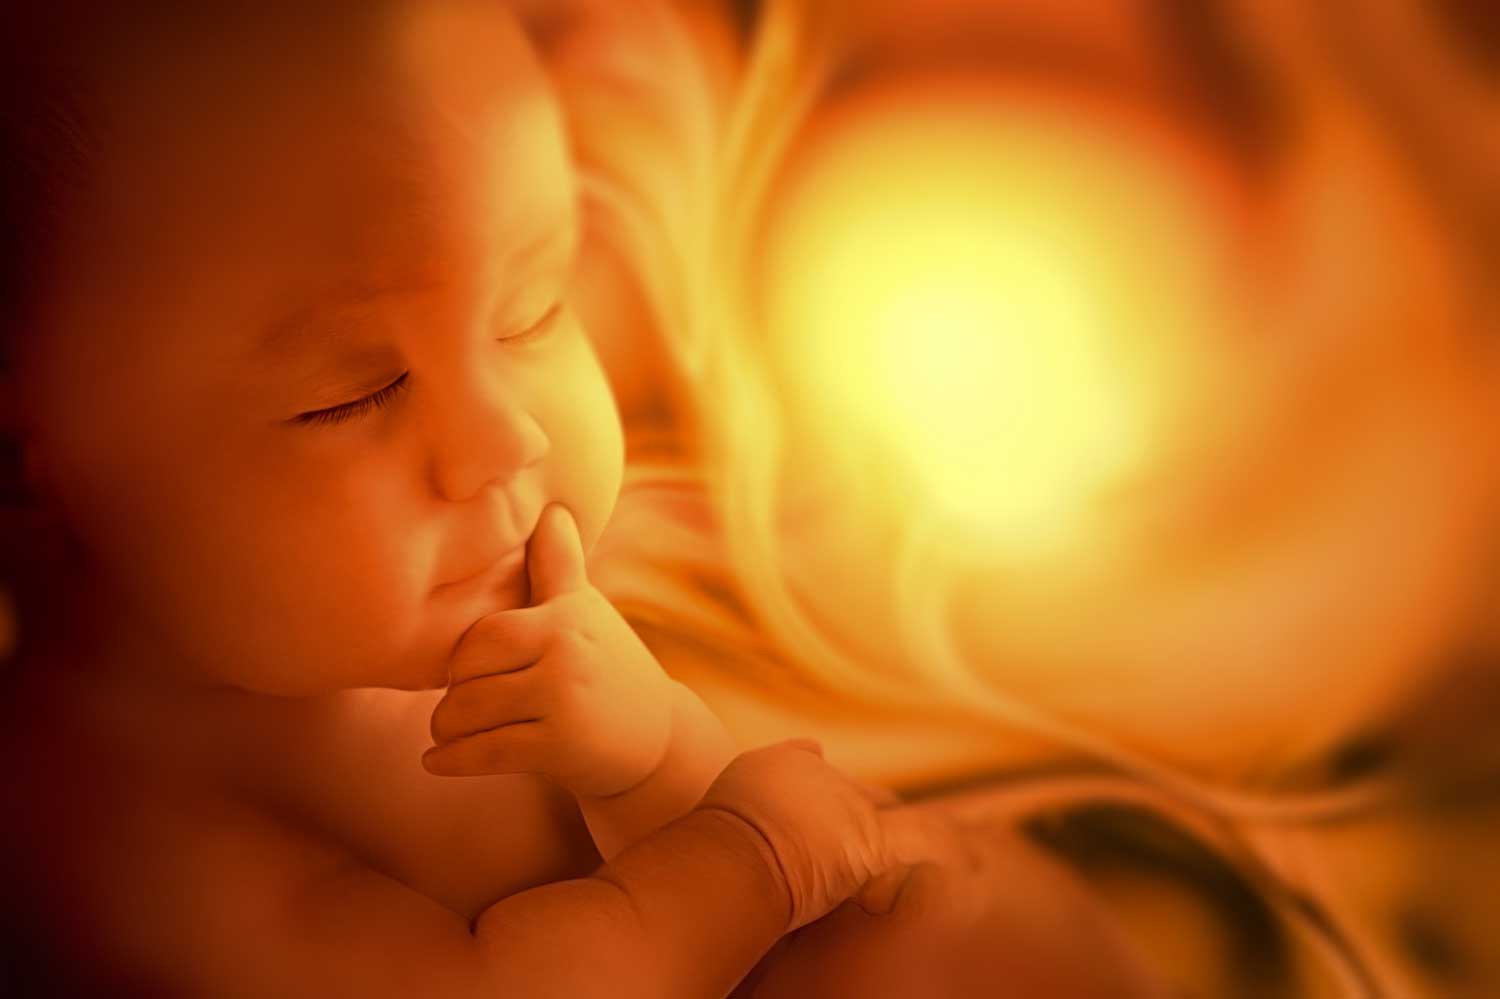 Embryo inside mother ultrasound image